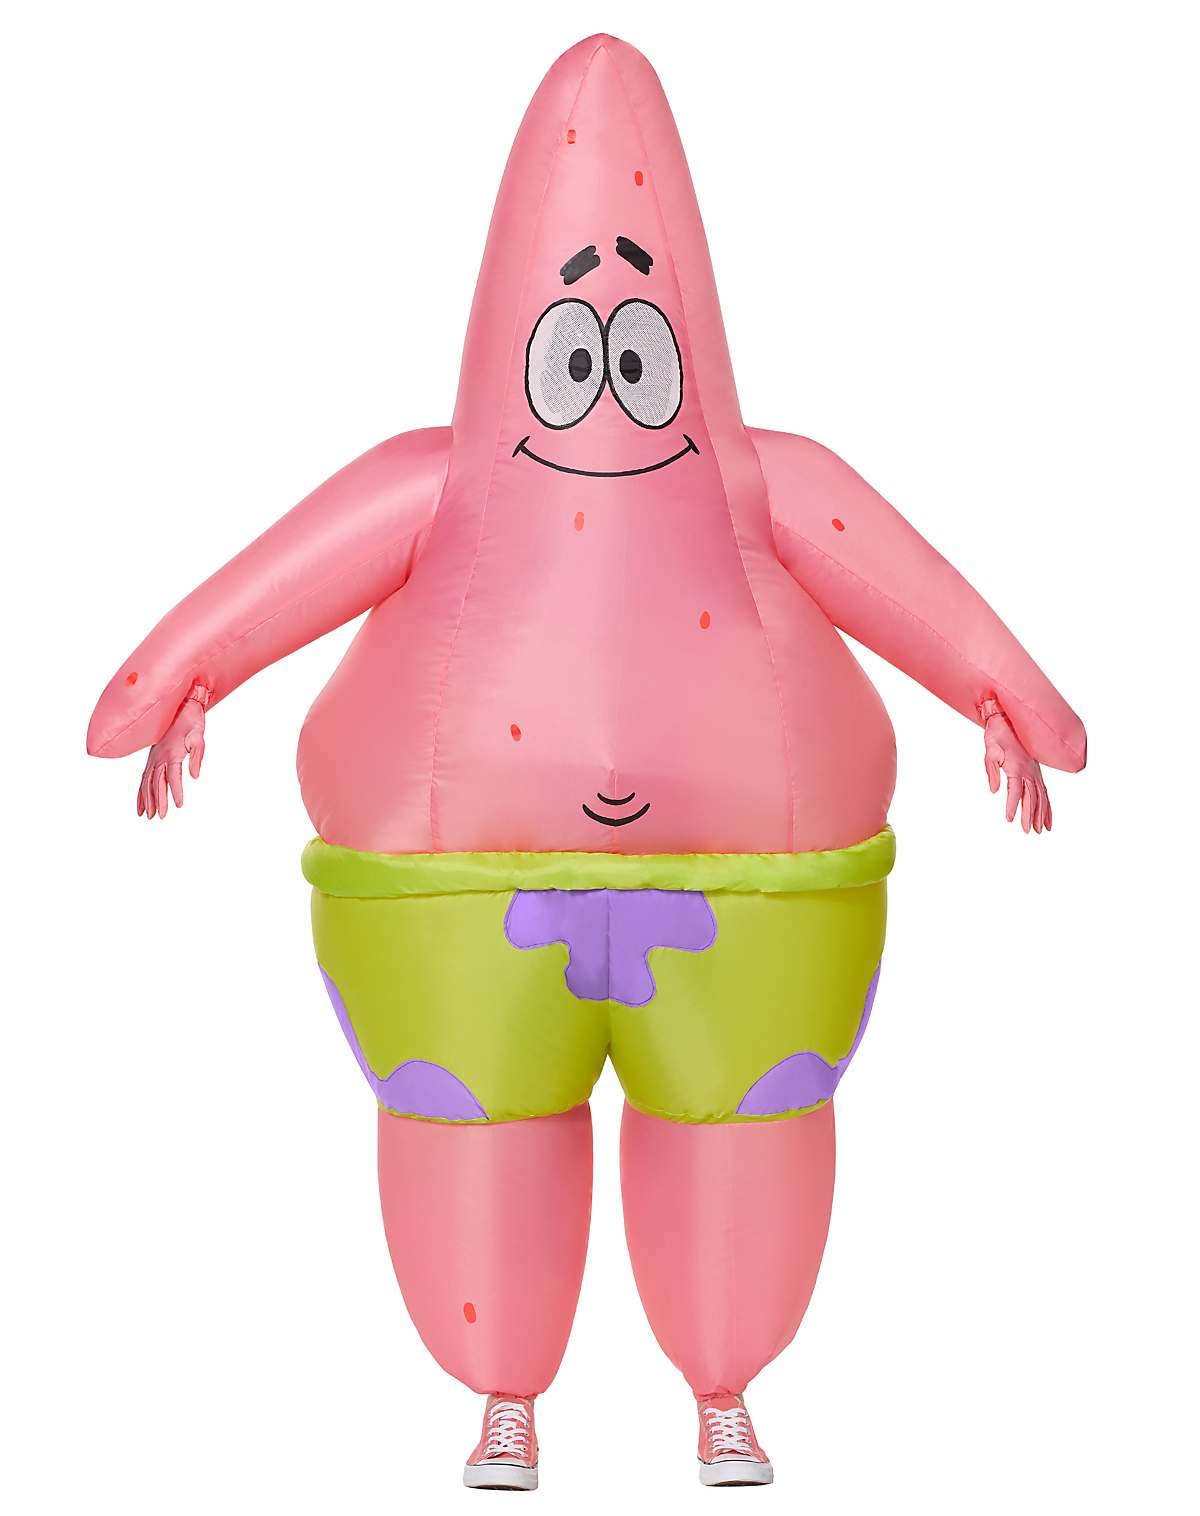 Adult Patrick Star Inflatable Costume - SpongeBob SquarePants